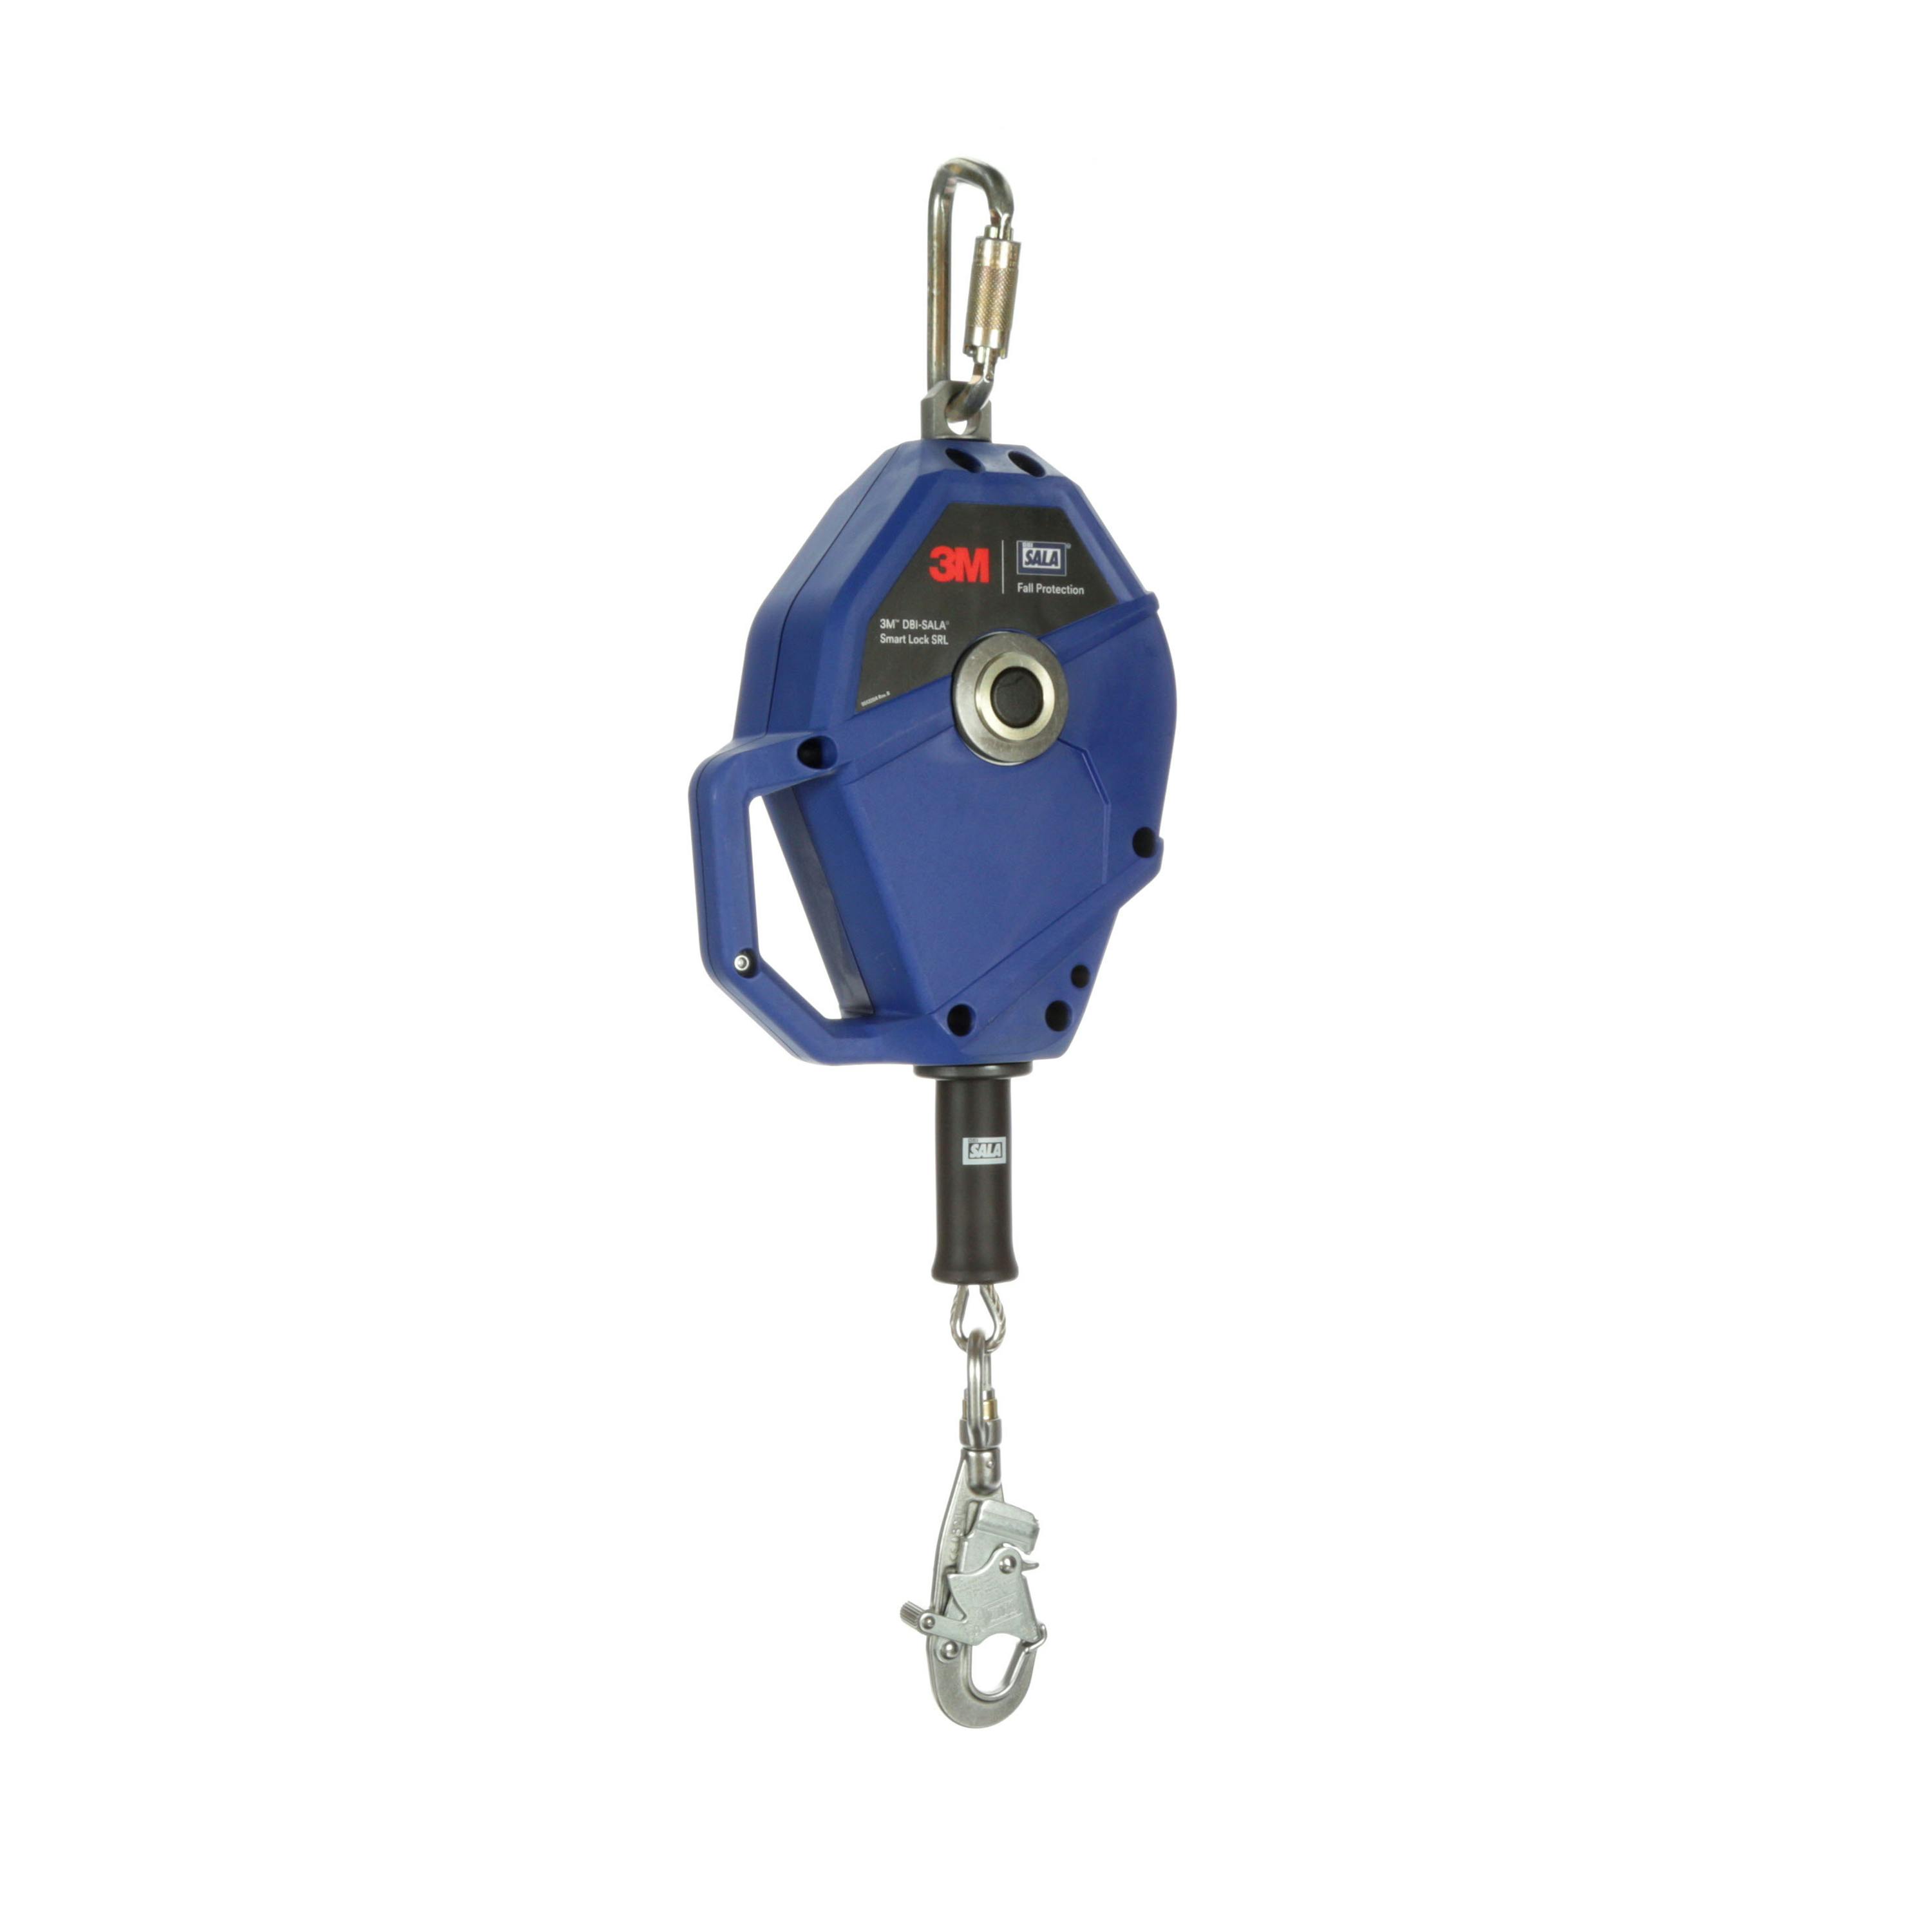 3M™ DBI-SALA® Smart Lock Self-Retracting Lifeline 3503804, Stainless Steel Cable, Blue, 6 m